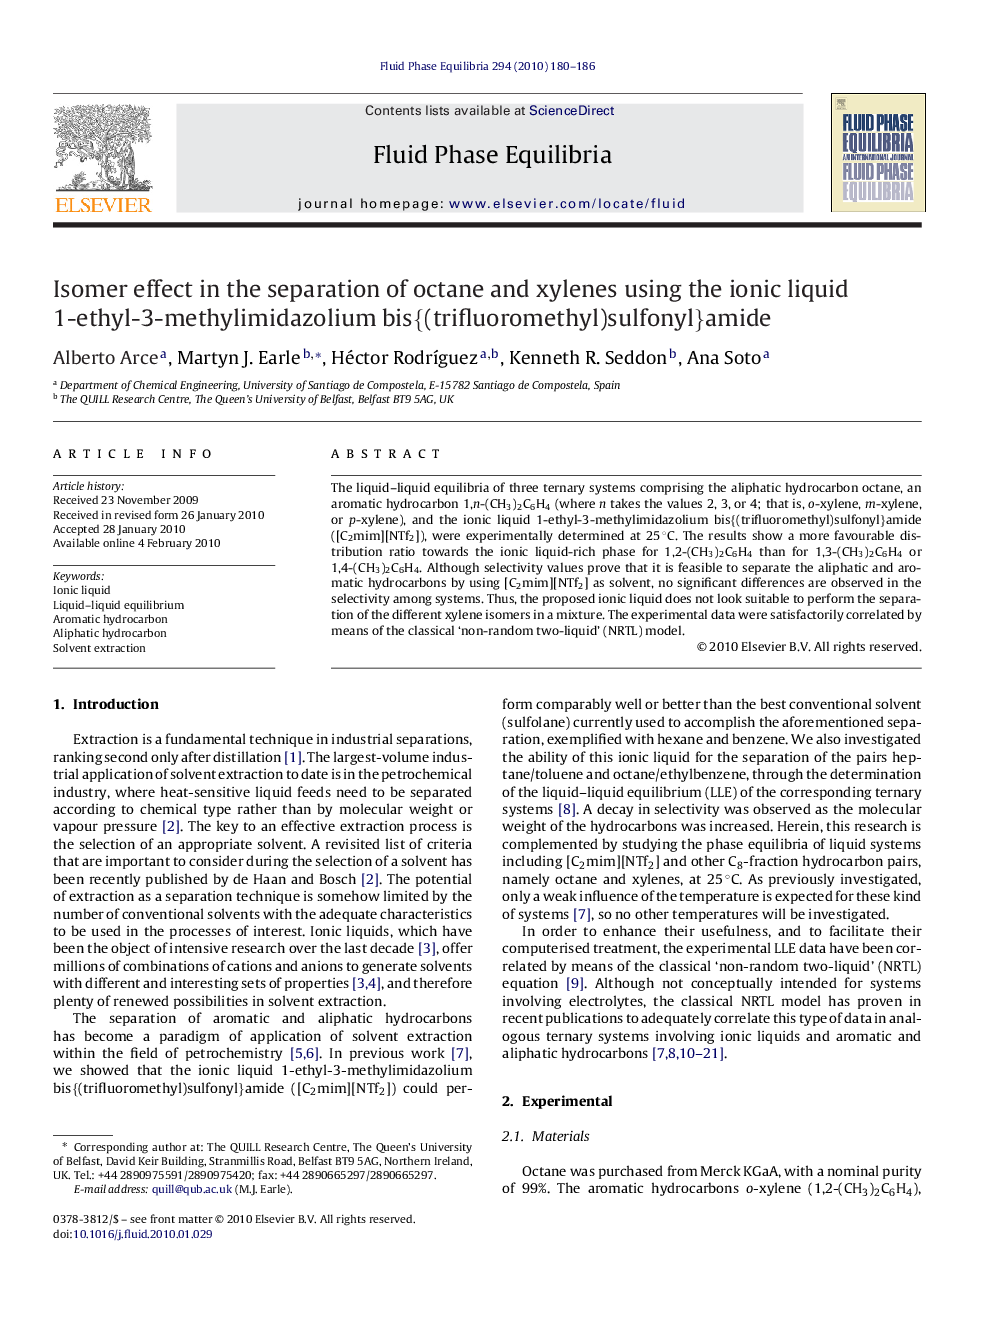 Isomer effect in the separation of octane and xylenes using the ionic liquid 1-ethyl-3-methylimidazolium bis{(trifluoromethyl)sulfonyl}amide